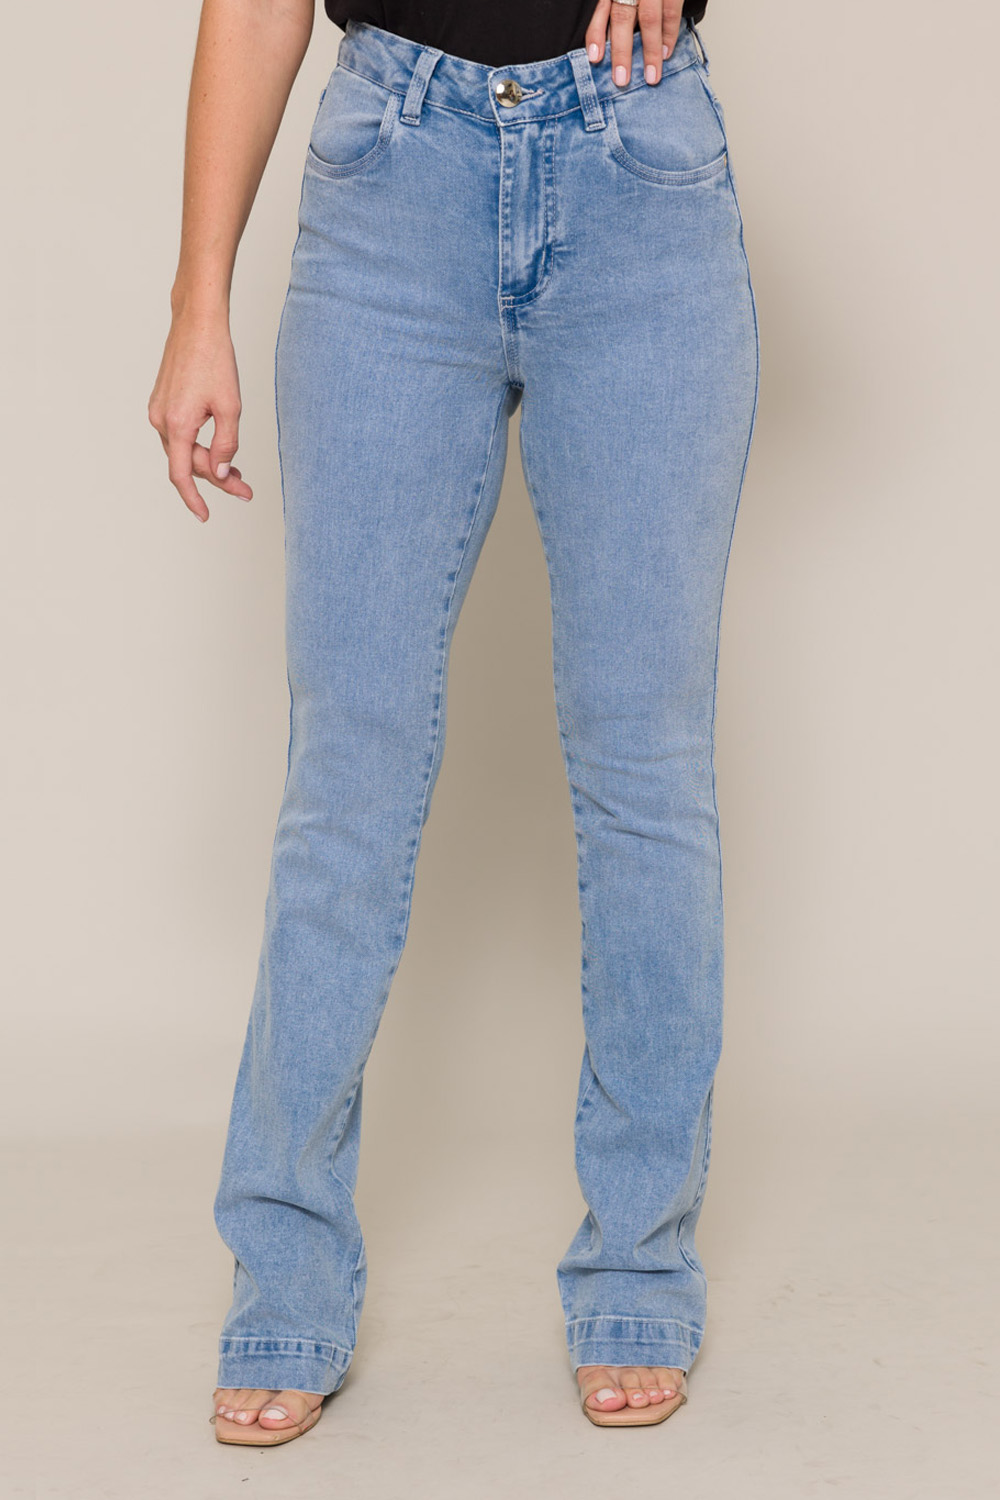 Calça Jeans Flare Basic 11642 - Jeans Claro